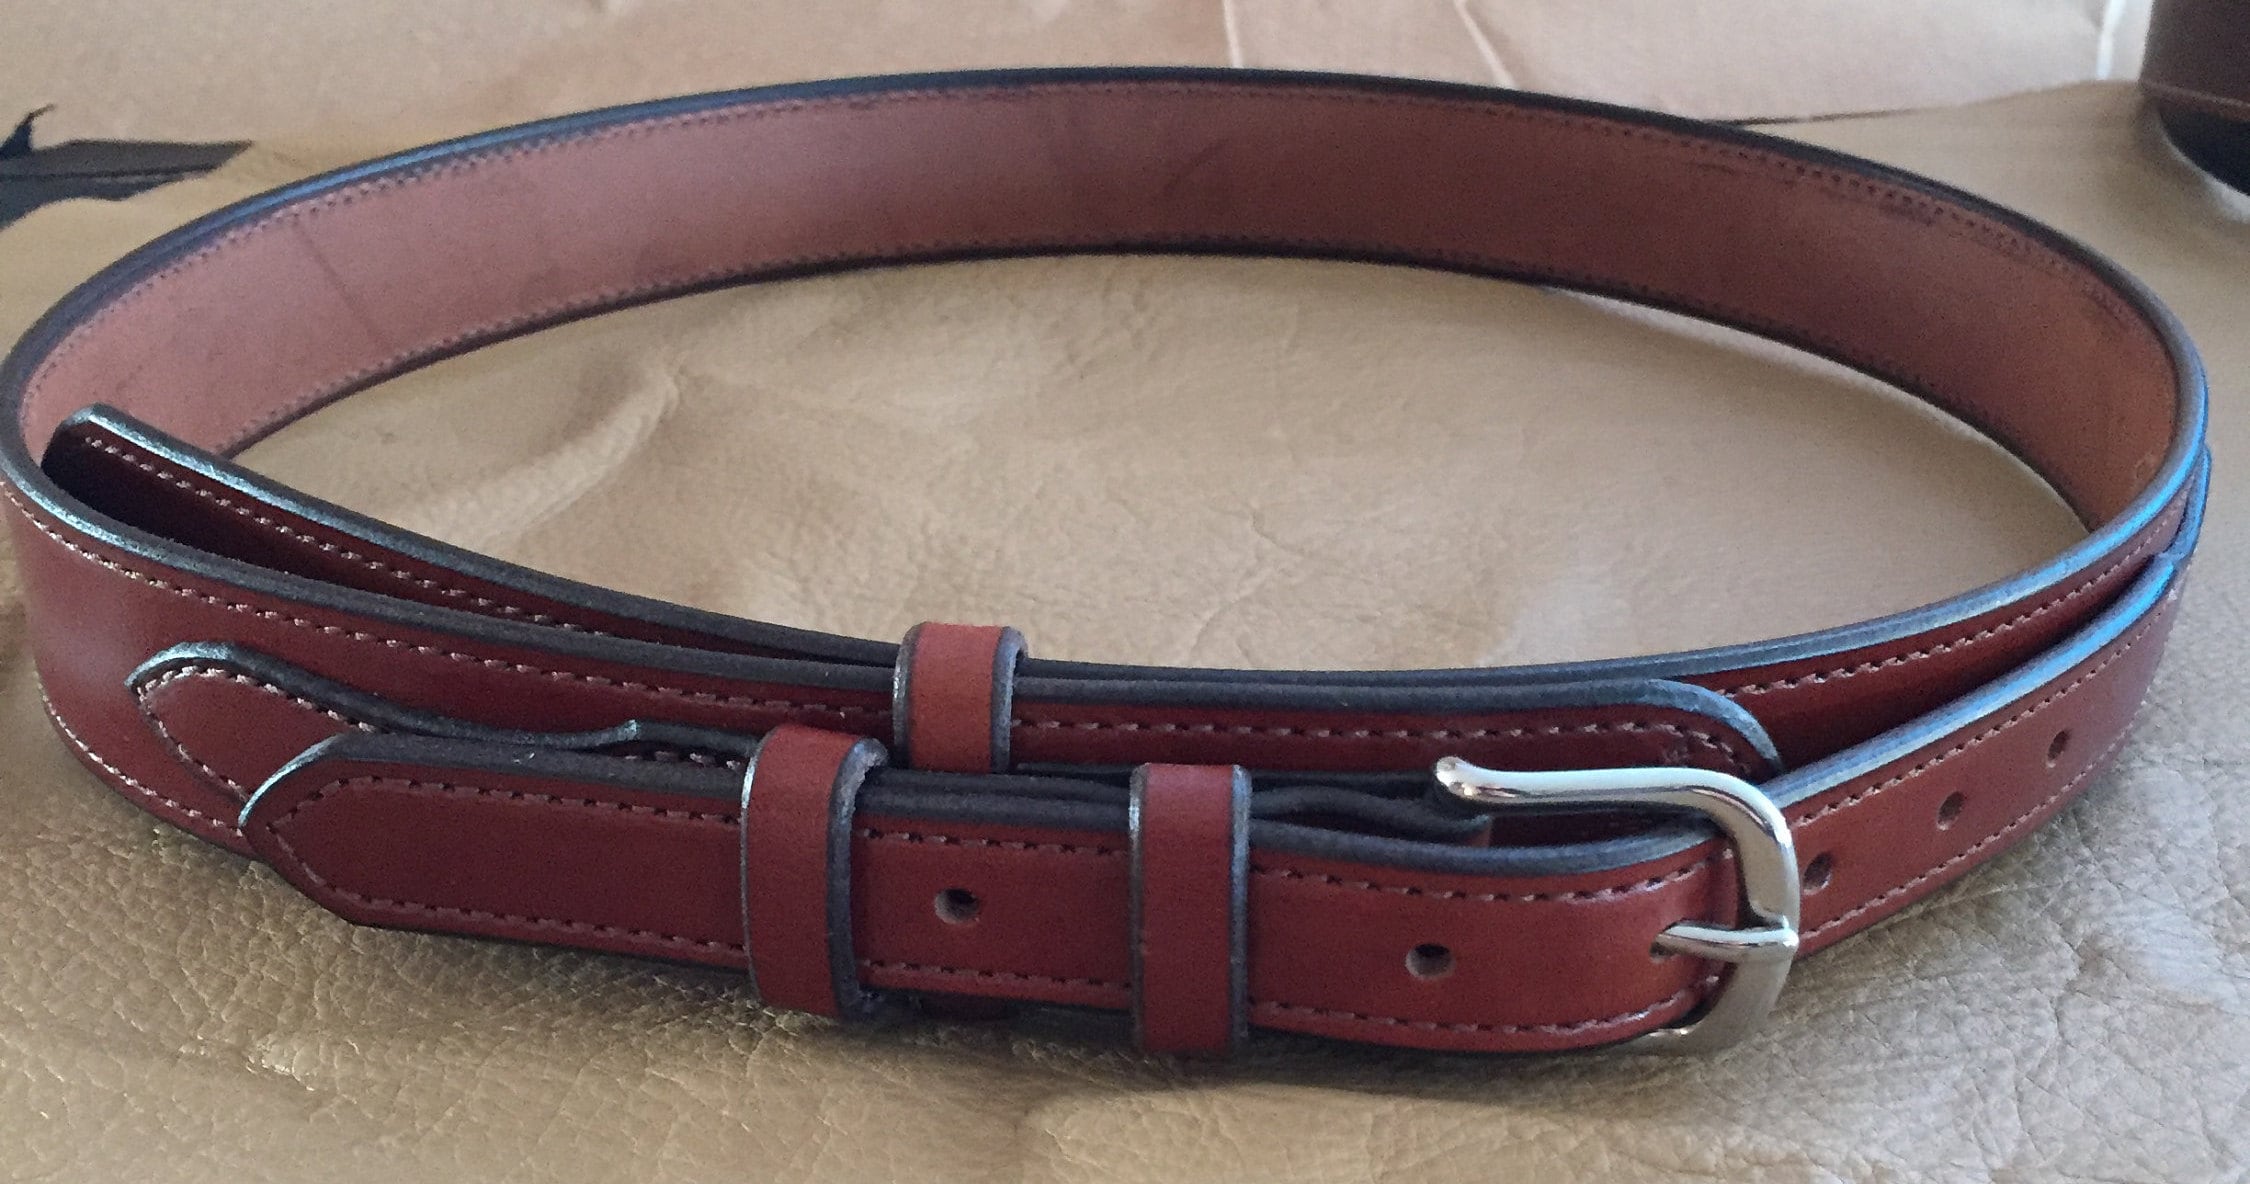 Western Cowboy Echte Lederen Riem-Made in Lancaster PA-Verwijderbare Gesp-Gestikt Amish Handgemaakt 1.5 "Wide Texas Ranger Style Belt Accessoires Riemen & bretels Riemen 